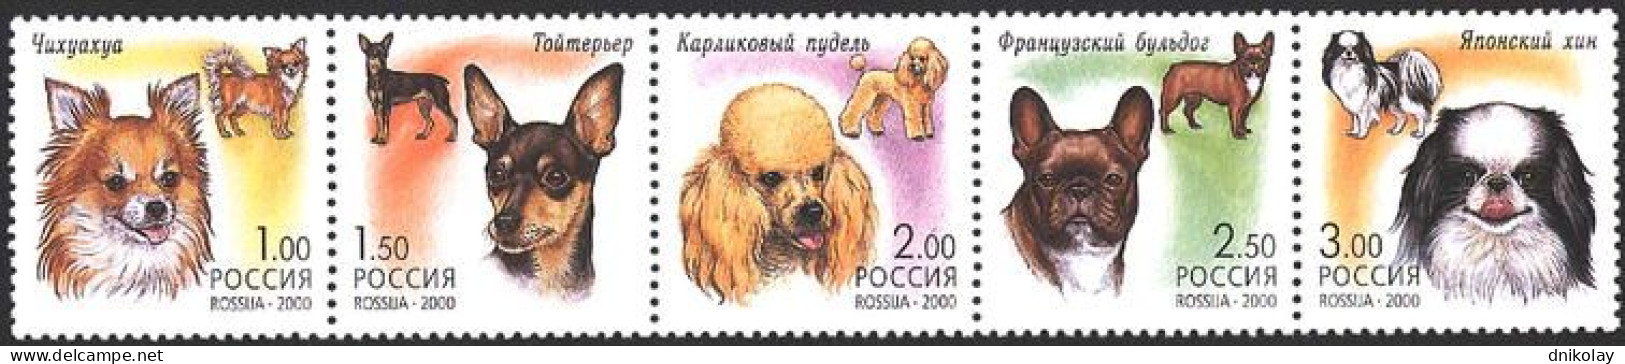 2000 831 Russia Decorative Dogs MNH - Nuevos